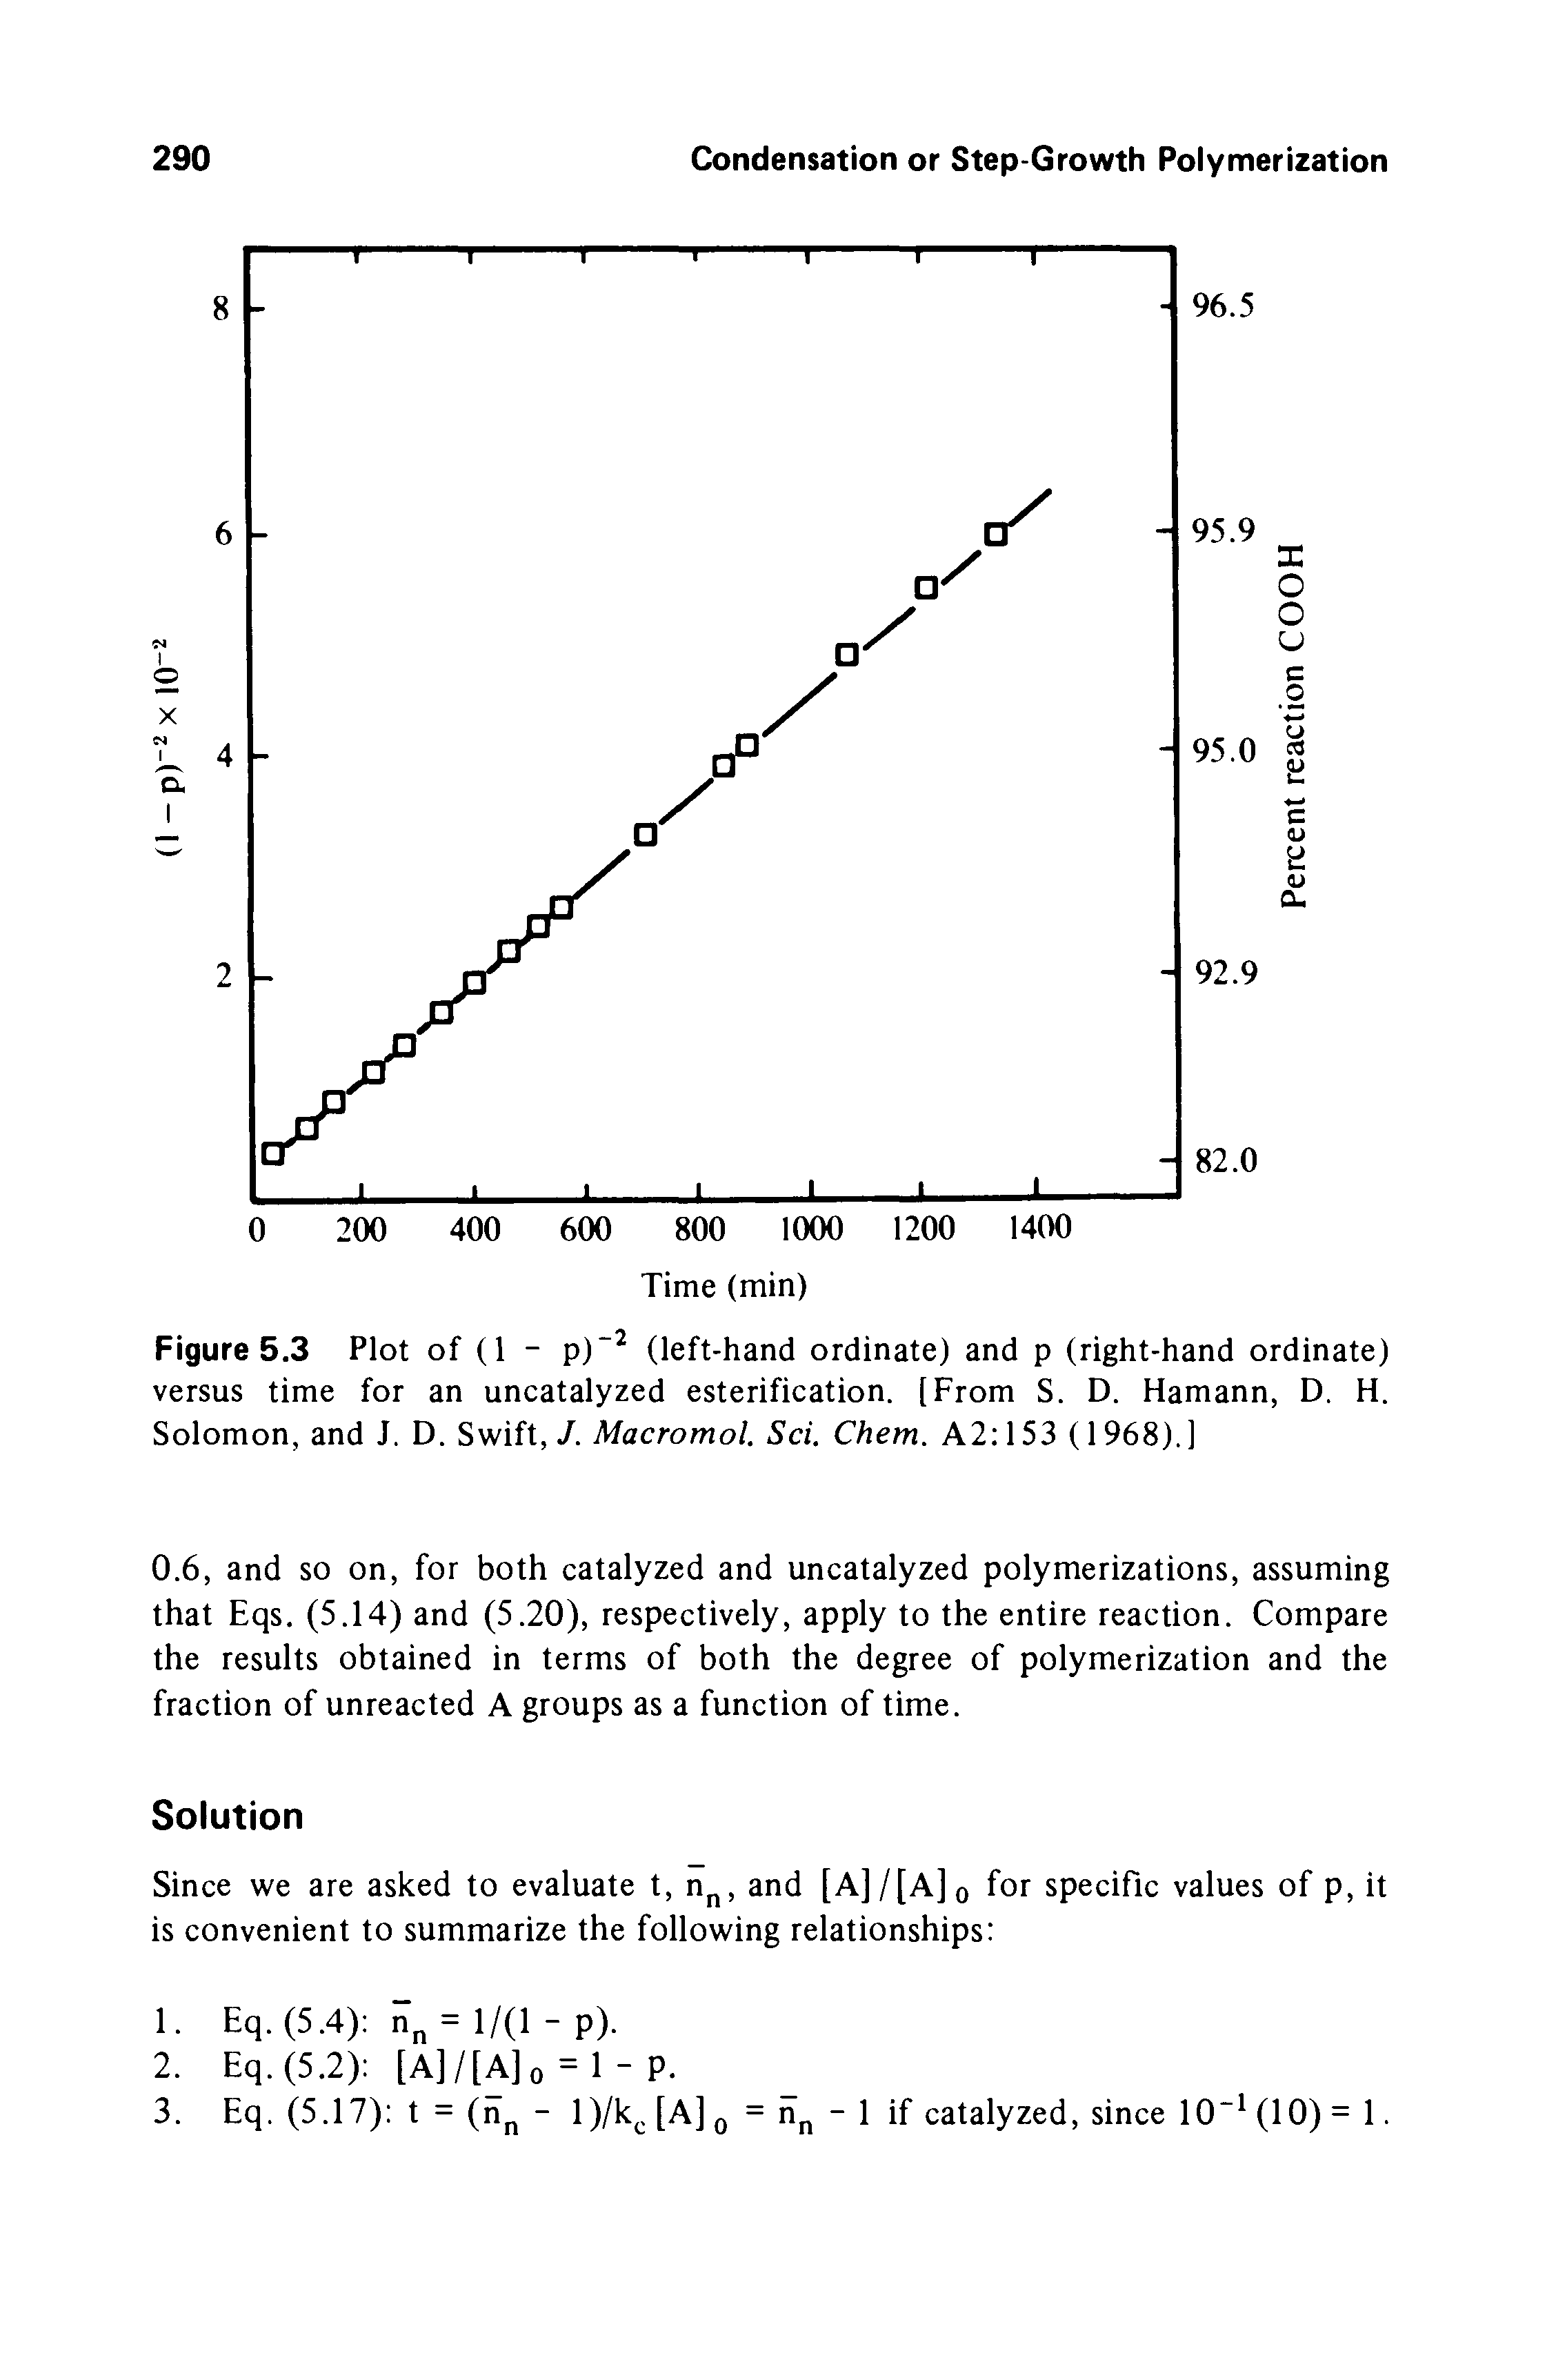 Figure 5.3 Plot of (1 - p) (left-hand ordinate) and p (right-hand ordinate) versus time for an uncatalyzed esterification. [From S. D. Hamann, D. H. Solomon, and J. D. Swift, /. Macromol. Sci. Chem. A2 153 (1968).]...